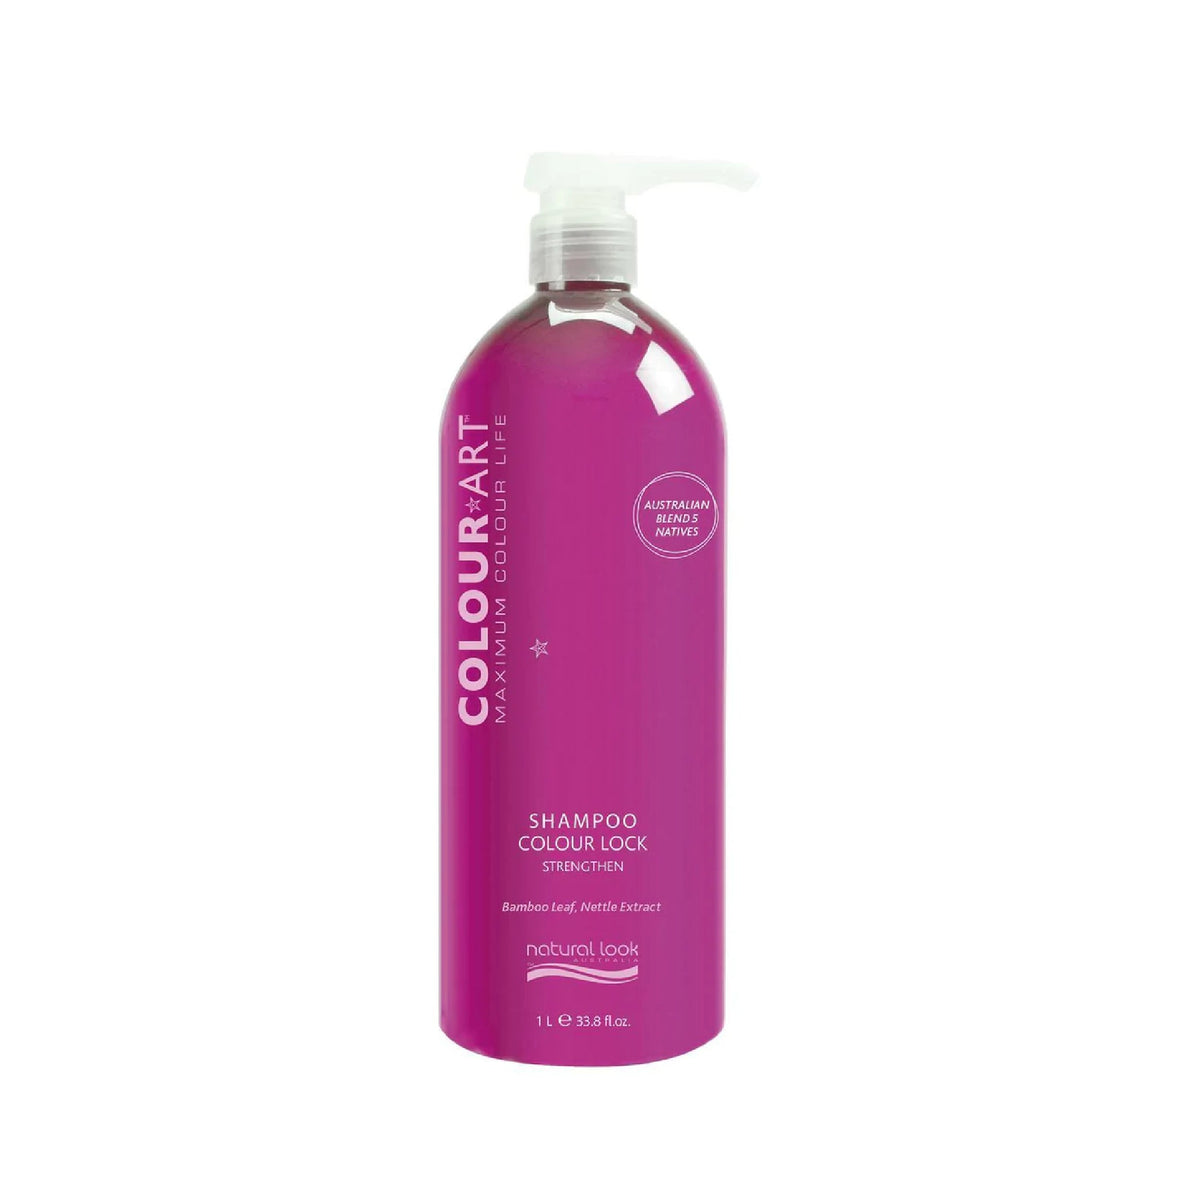 Colour Art Colour Lock Shampoo 1Ltr - Haircare Superstore